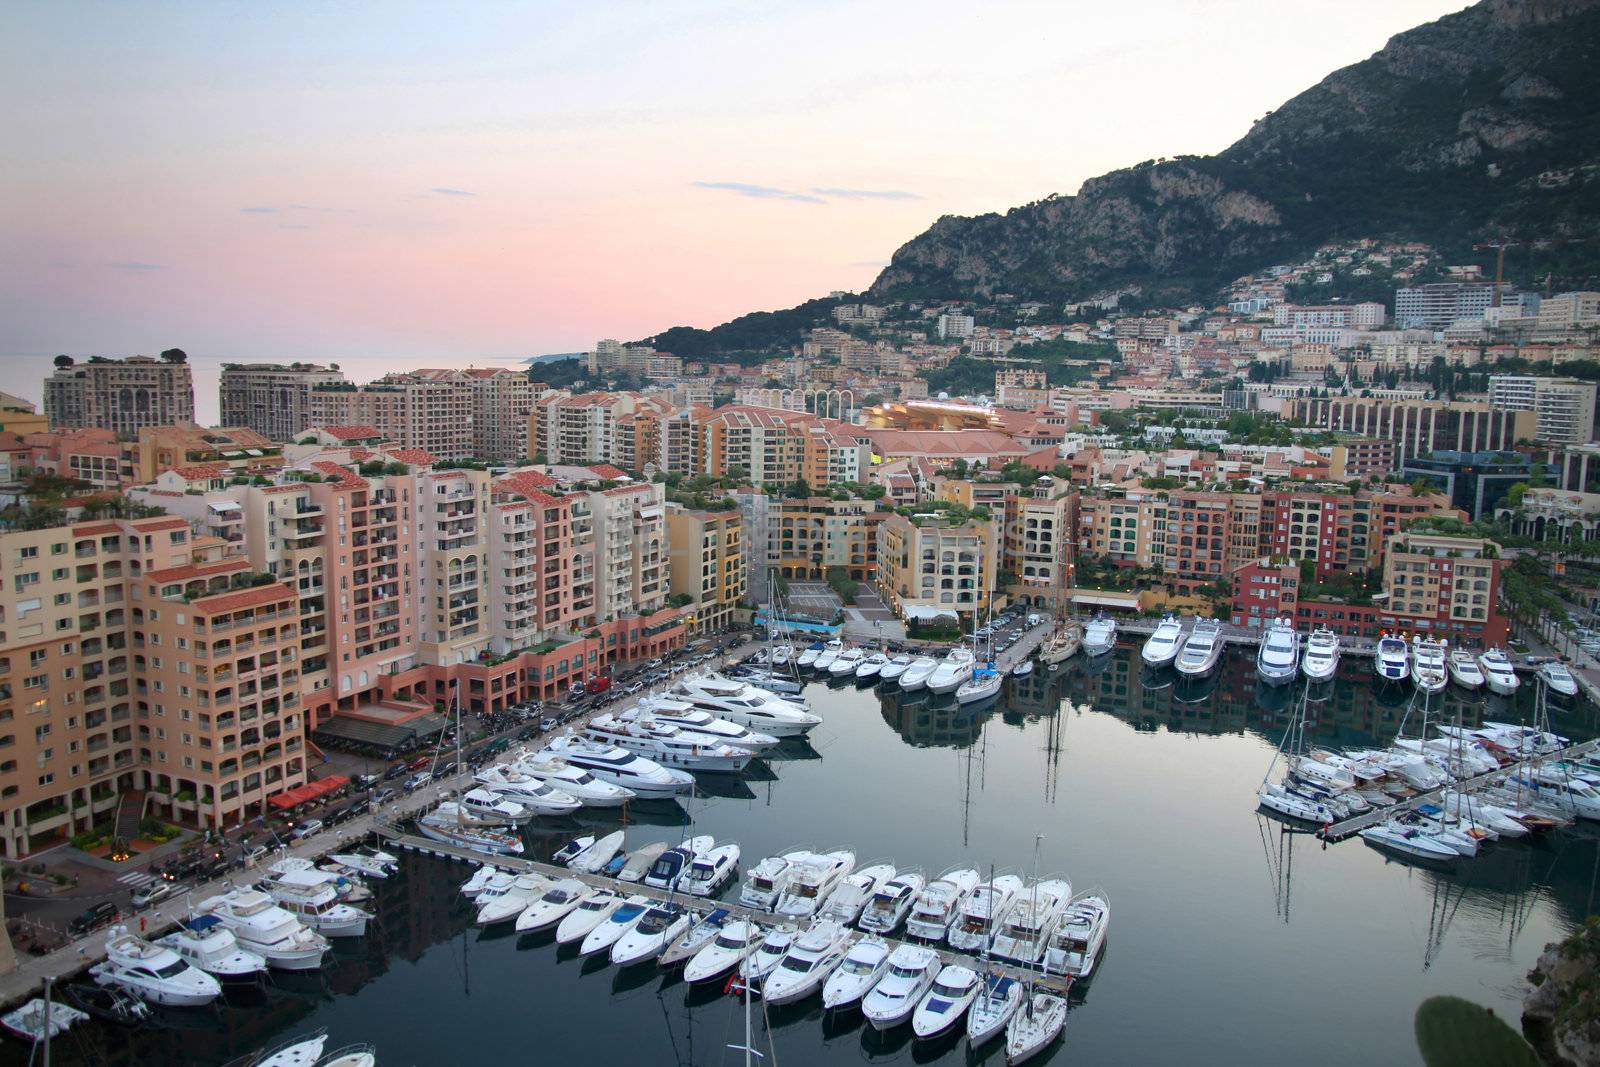 View of Monaco at night